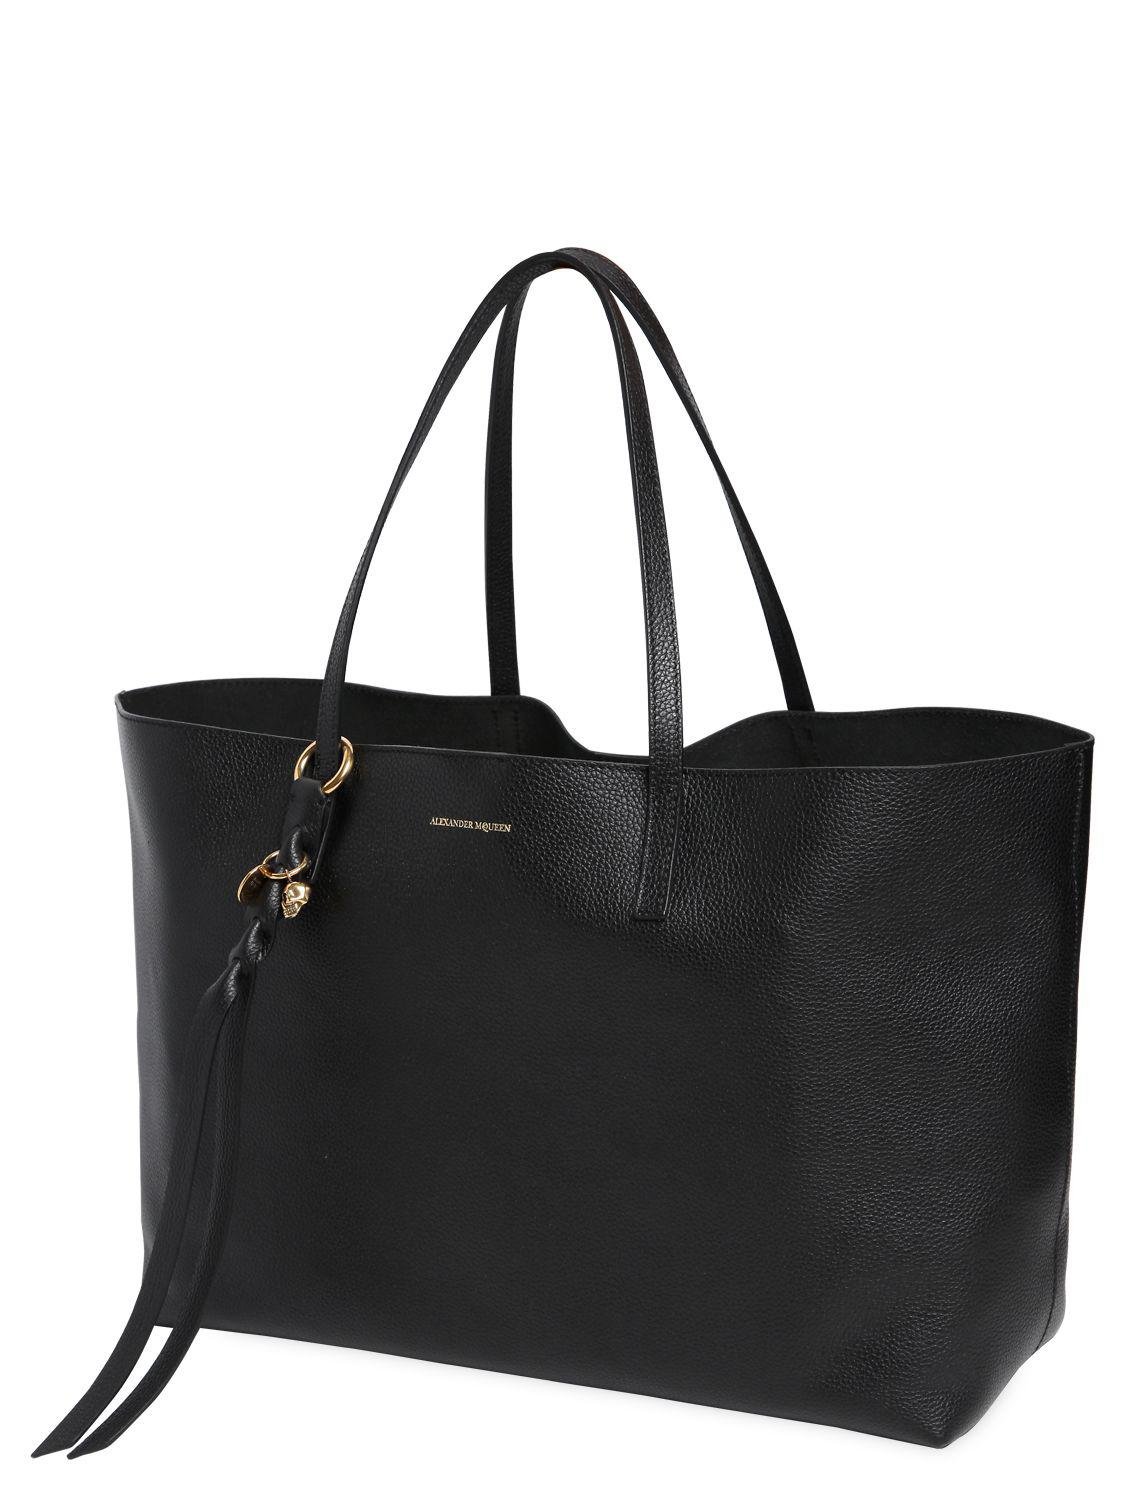 Lyst - Alexander Mcqueen Medium Leather Tote Bag in Black